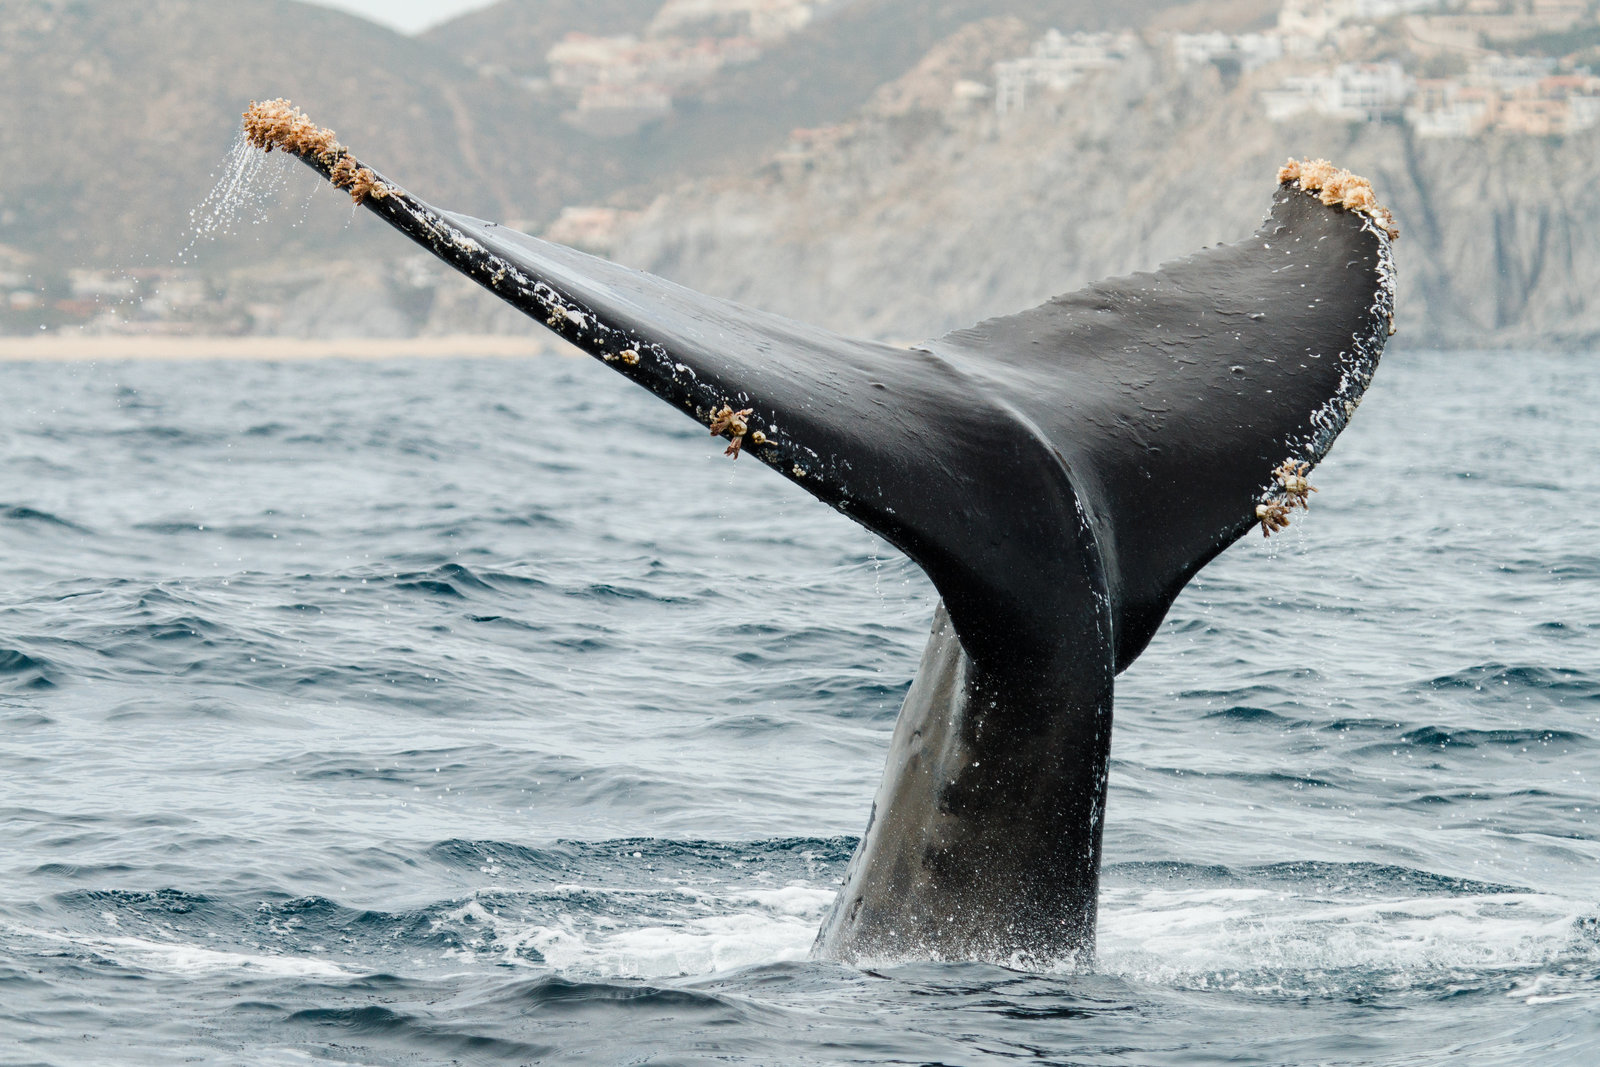 cameron-zegers-editorial-photographer-cabo-san-lucas-humpback-whale